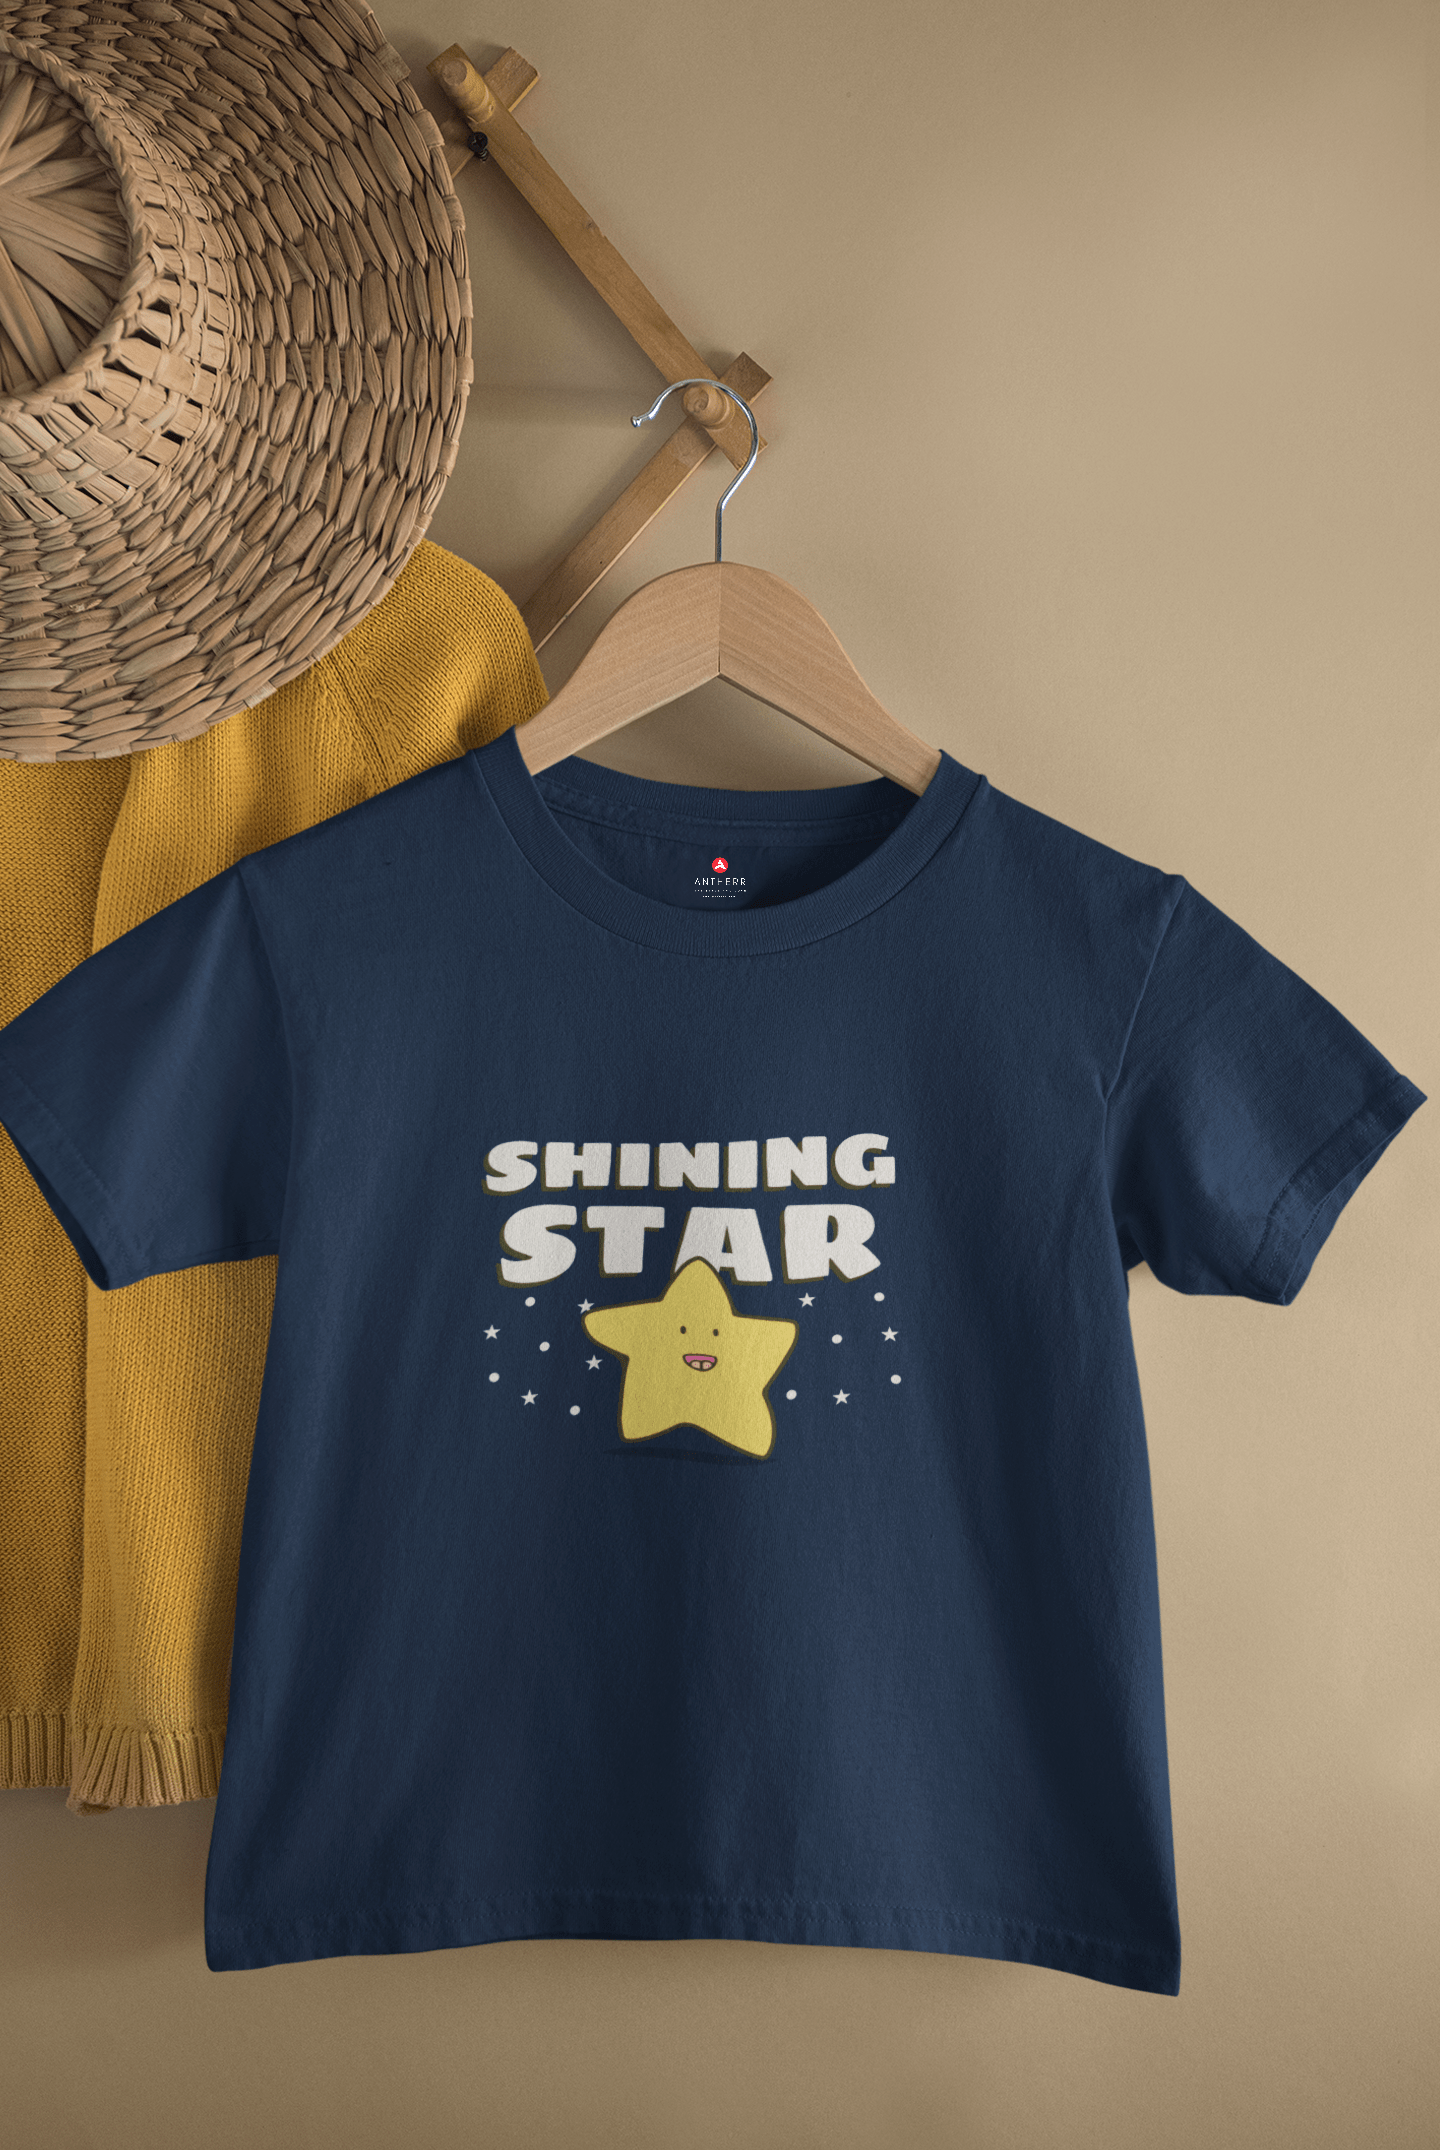 "SHINING STAR" KIDS HALF-SLEEVE T-SHIRT